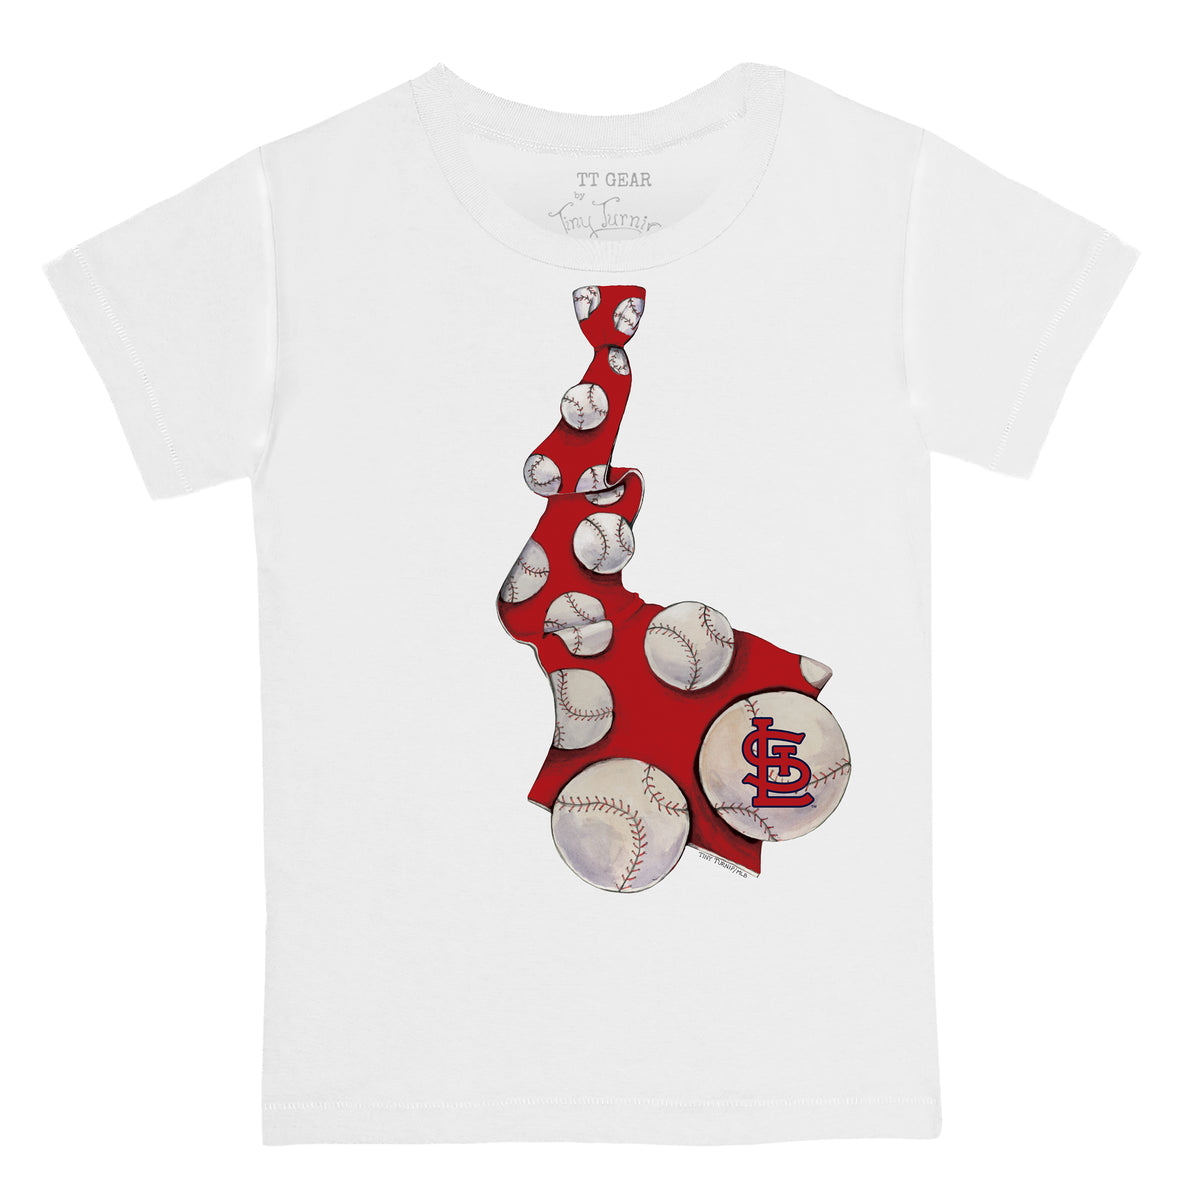 St. Louis Cardinals Hot Bats Tee Shirt Youth Medium (8-10) / Red